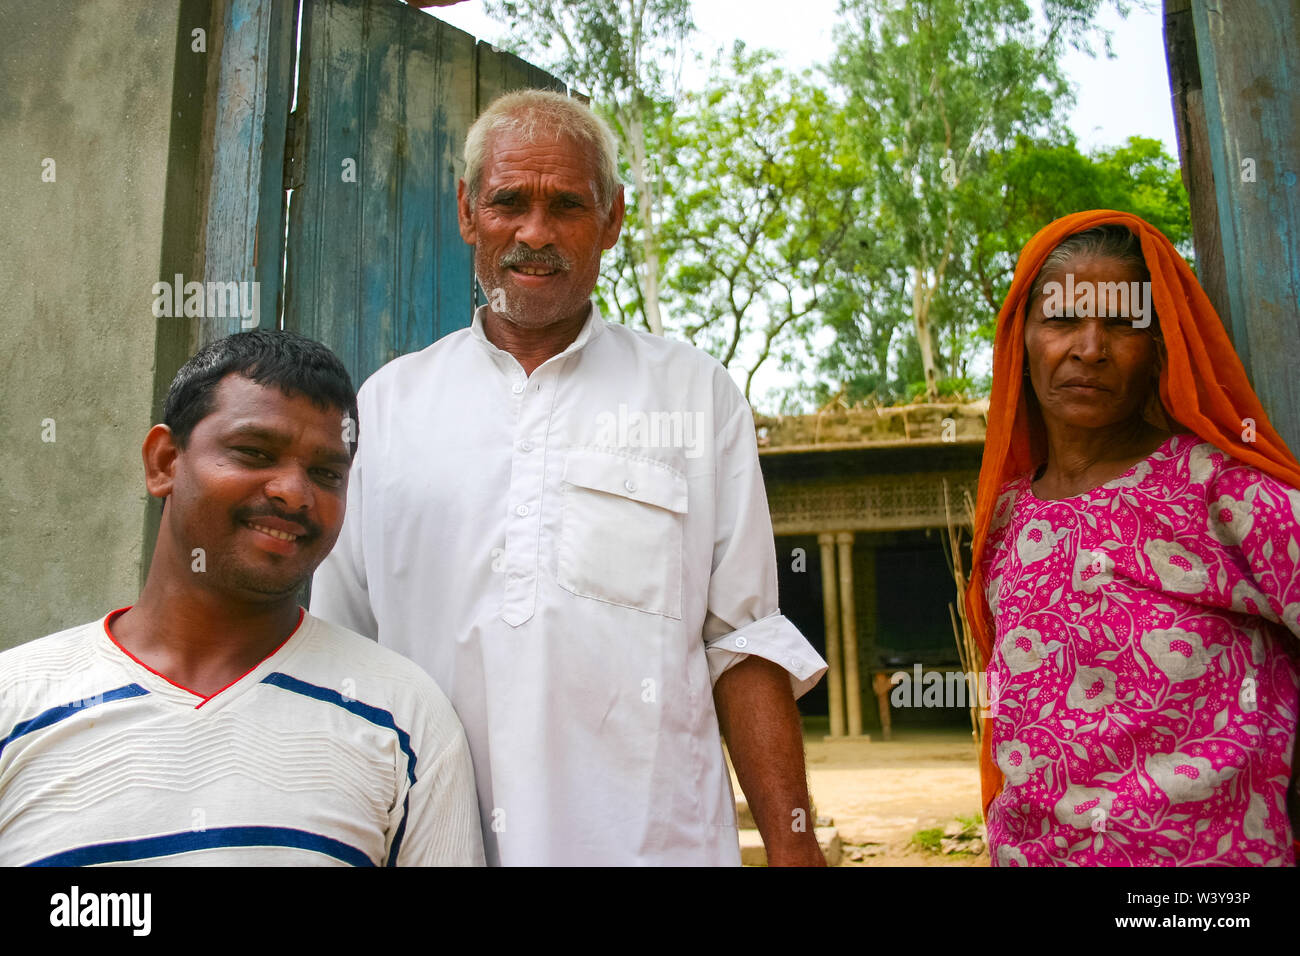 Amroha, Utar Pradesh, India - 2011: Unidentified Indian people from slums Stock Photo